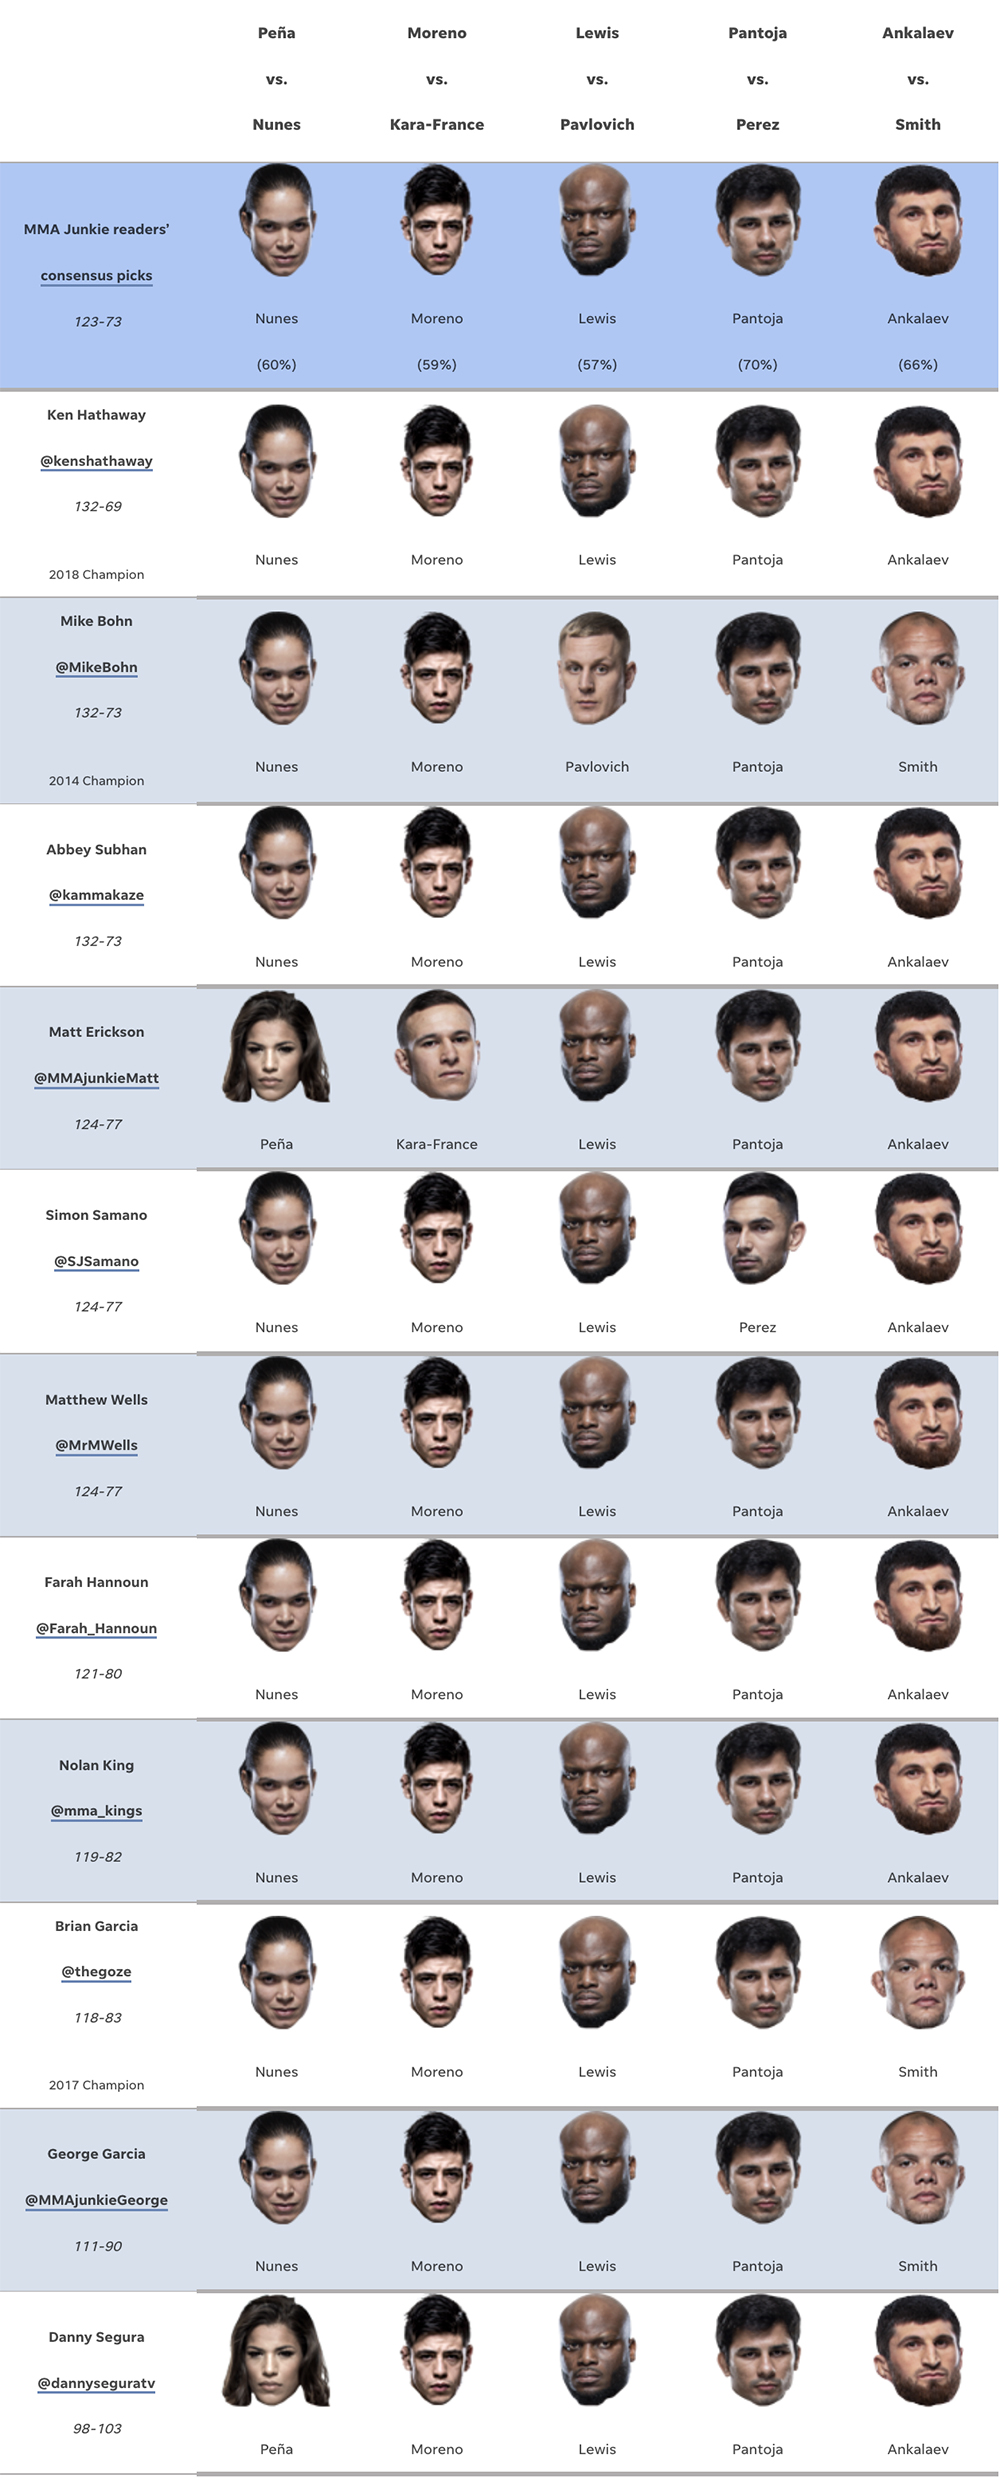 UFC 277 predictions: Who’s picking upsets in Peña vs. Nunes, Moreno vs. Kara-France title fights?